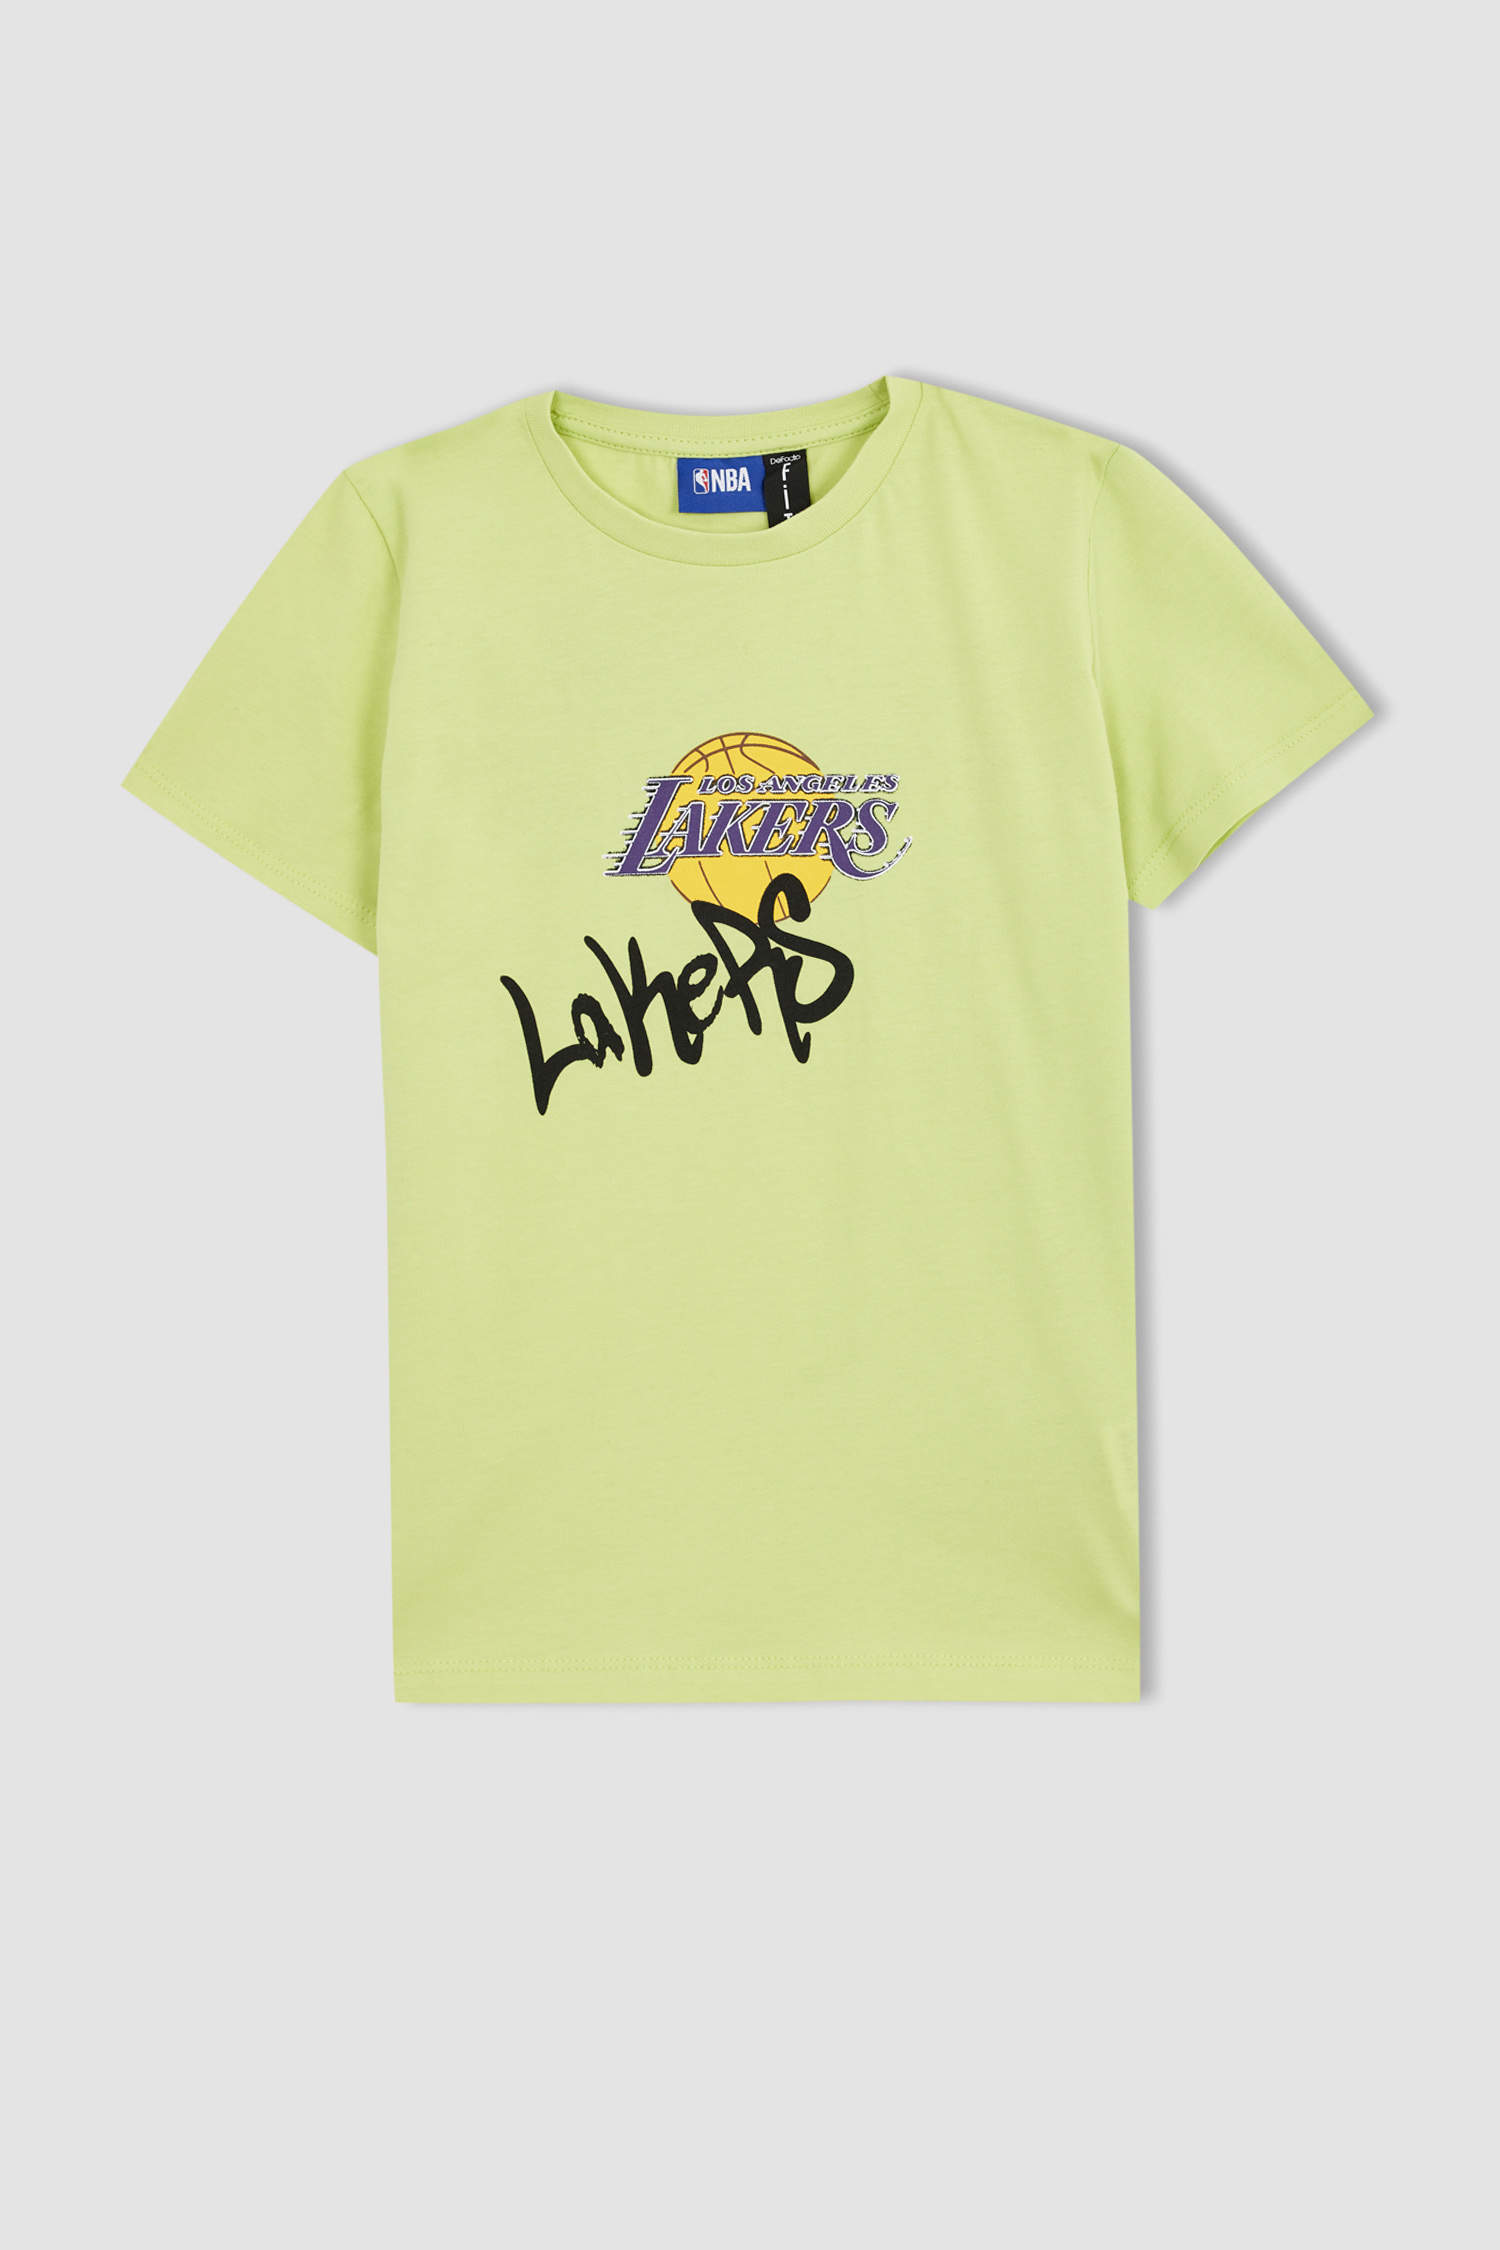 Lakers Colorblock Men Round Neck Light Green T-Shirt - Buy Lakers